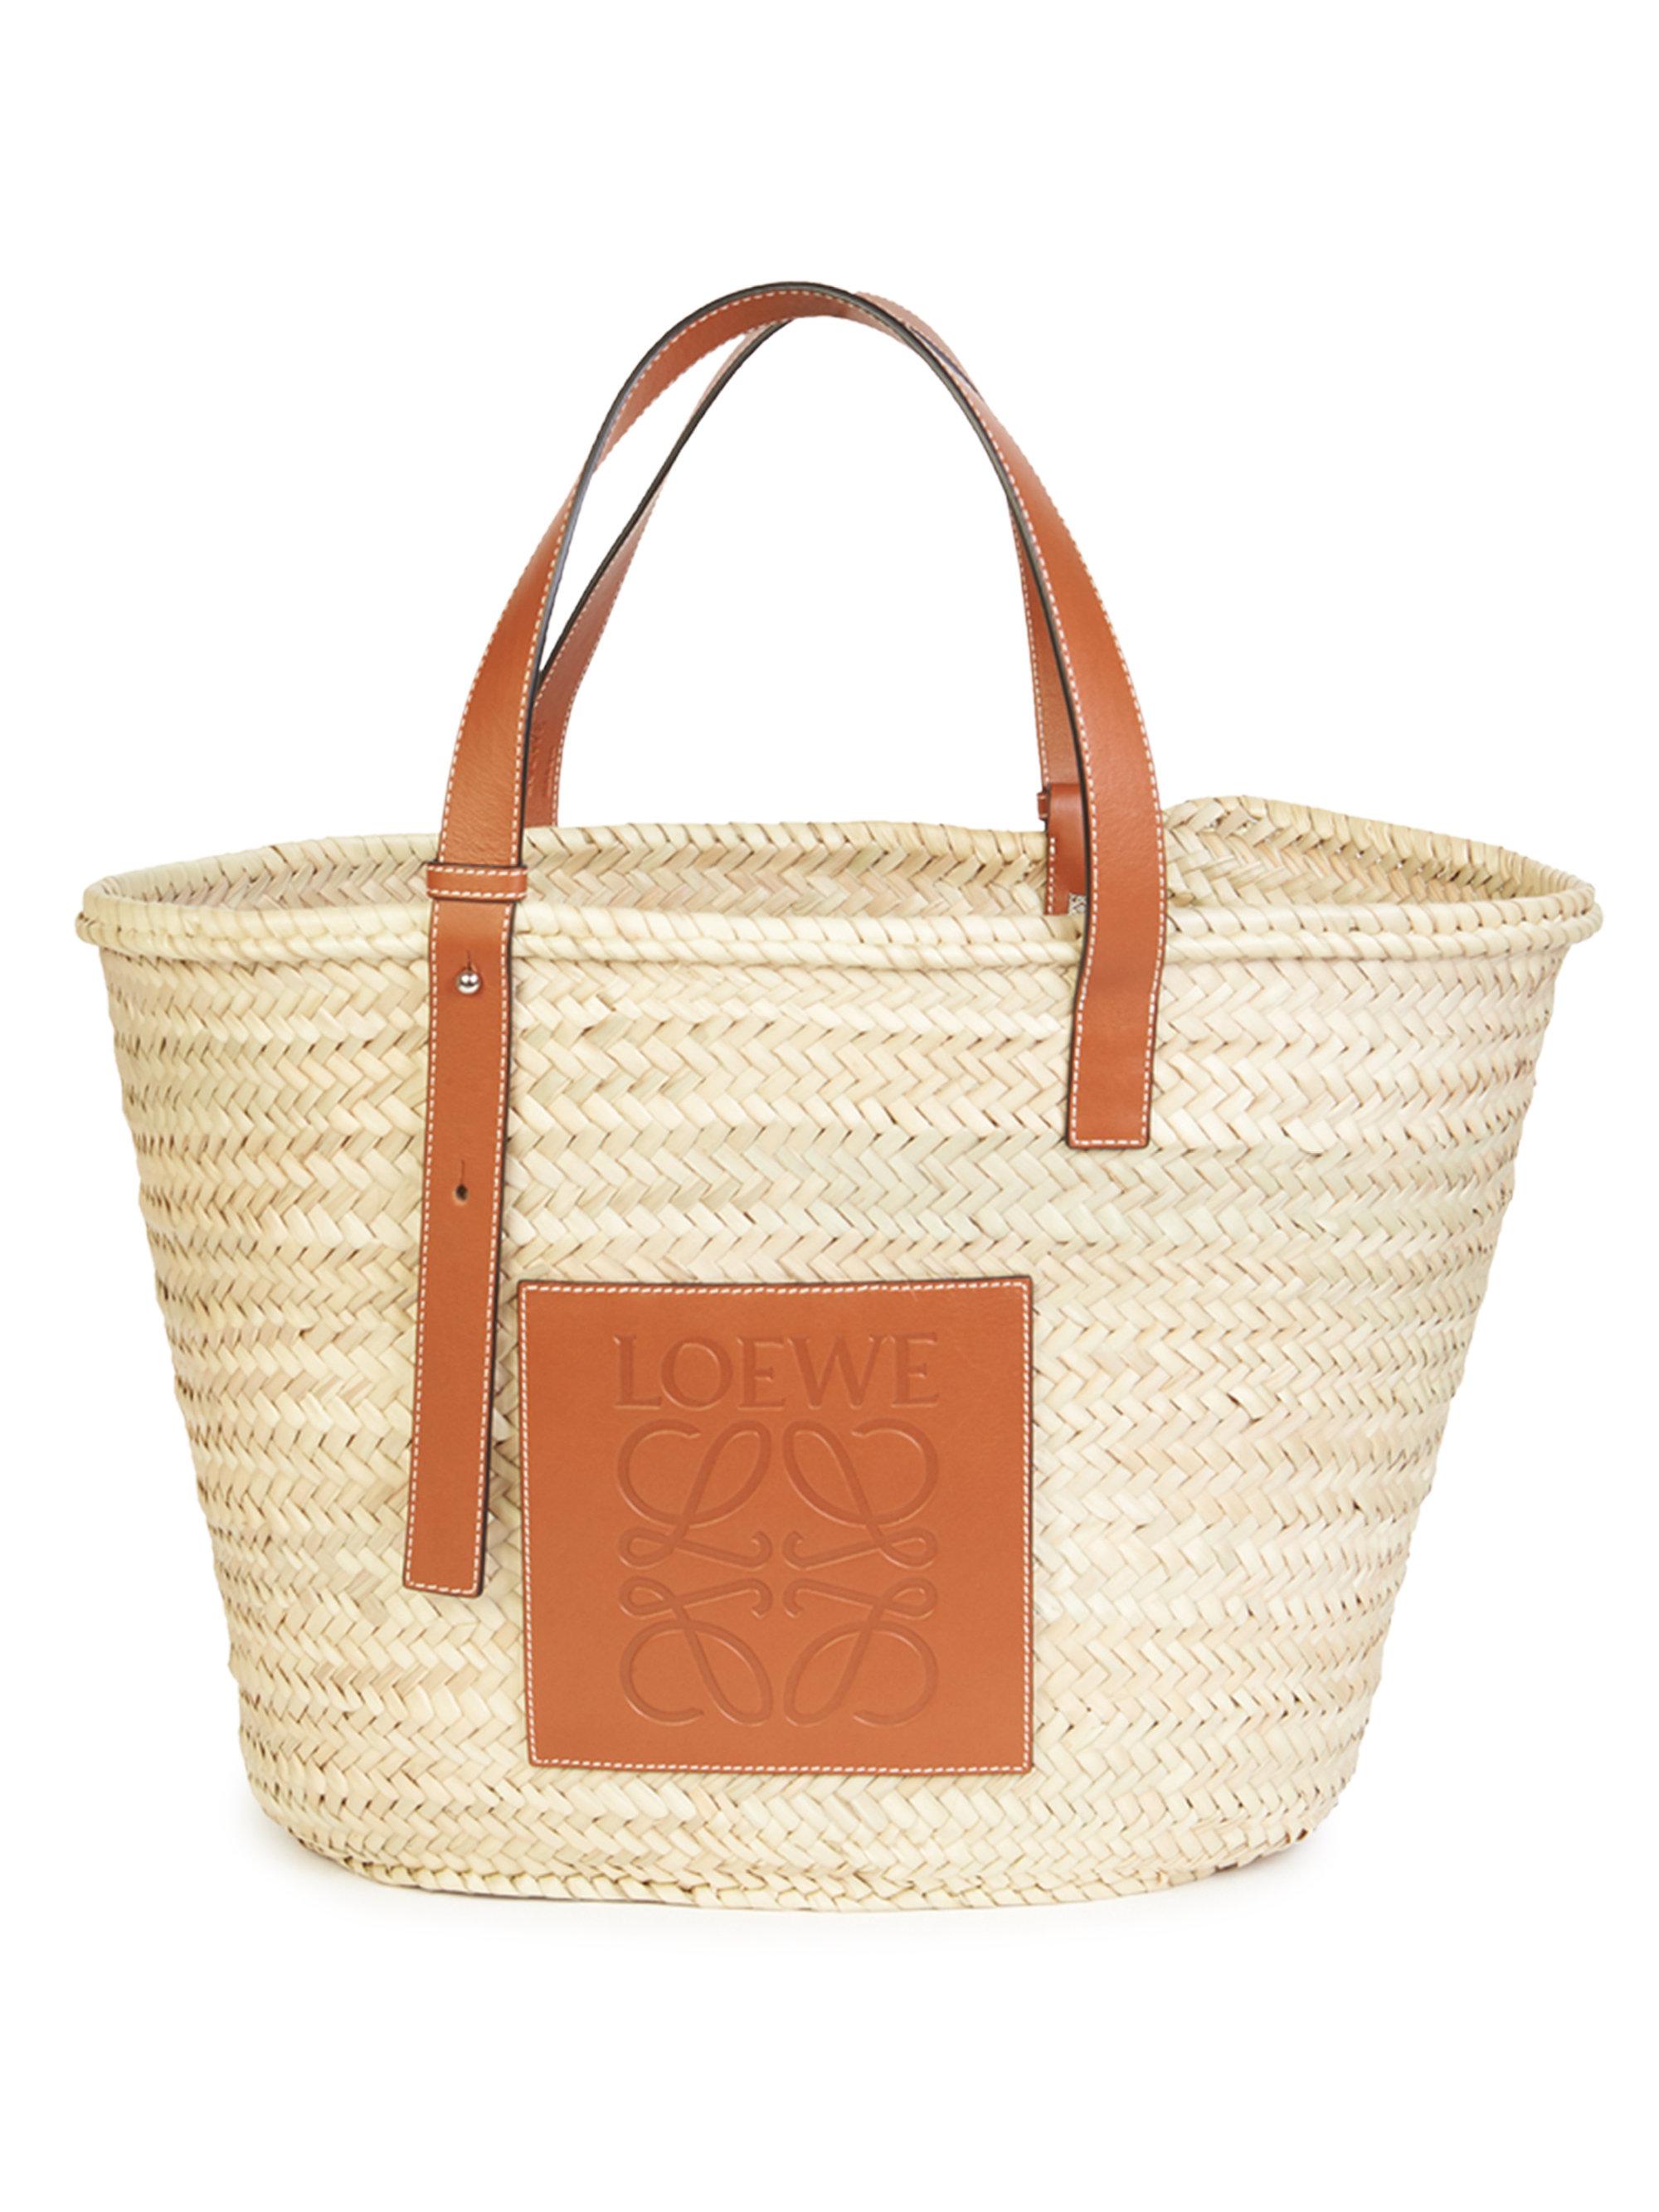 Loewe Large Basket Bag in Beige (Natural) - Save 46% - Lyst